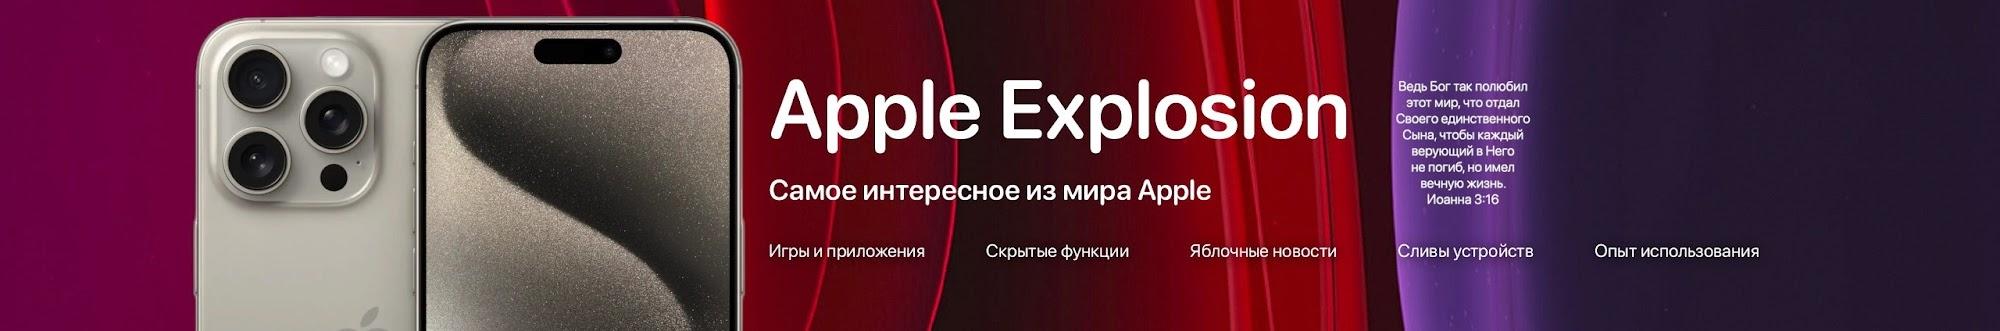 Apple Explosion